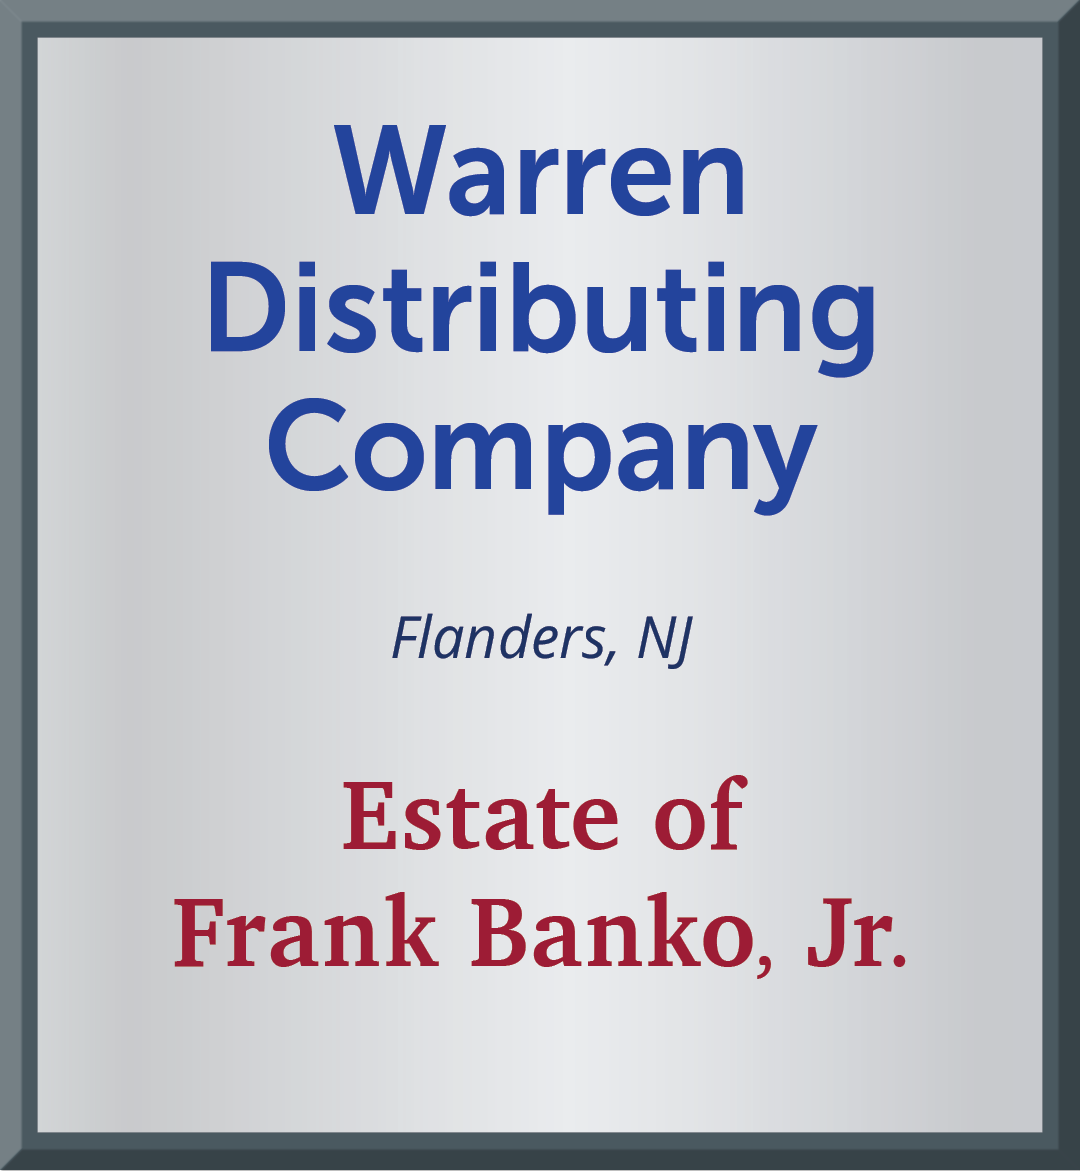 Warren Distributing Company